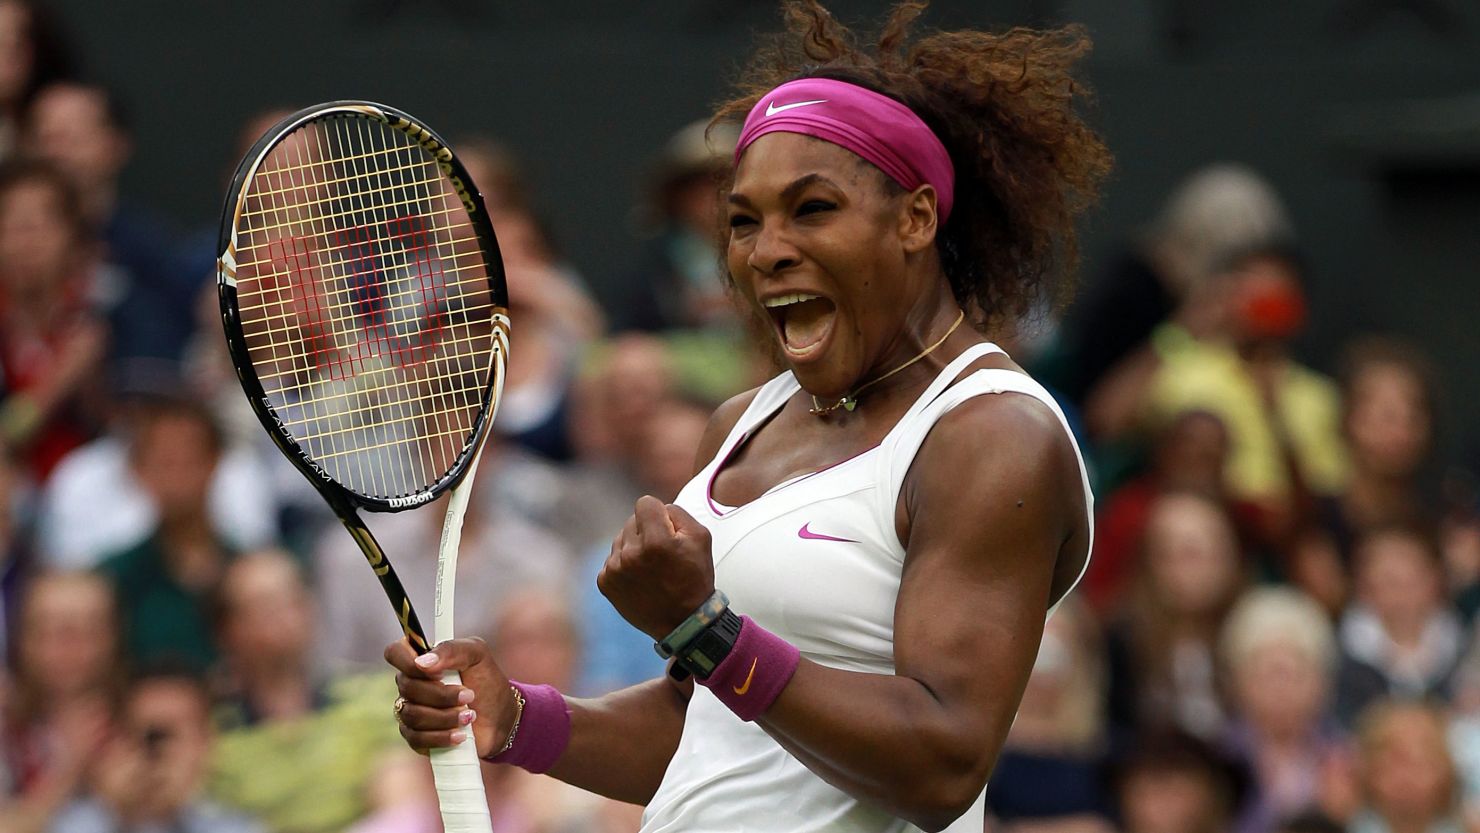 American Serena Williams has won four titles at Wimbledon during her illustrious career